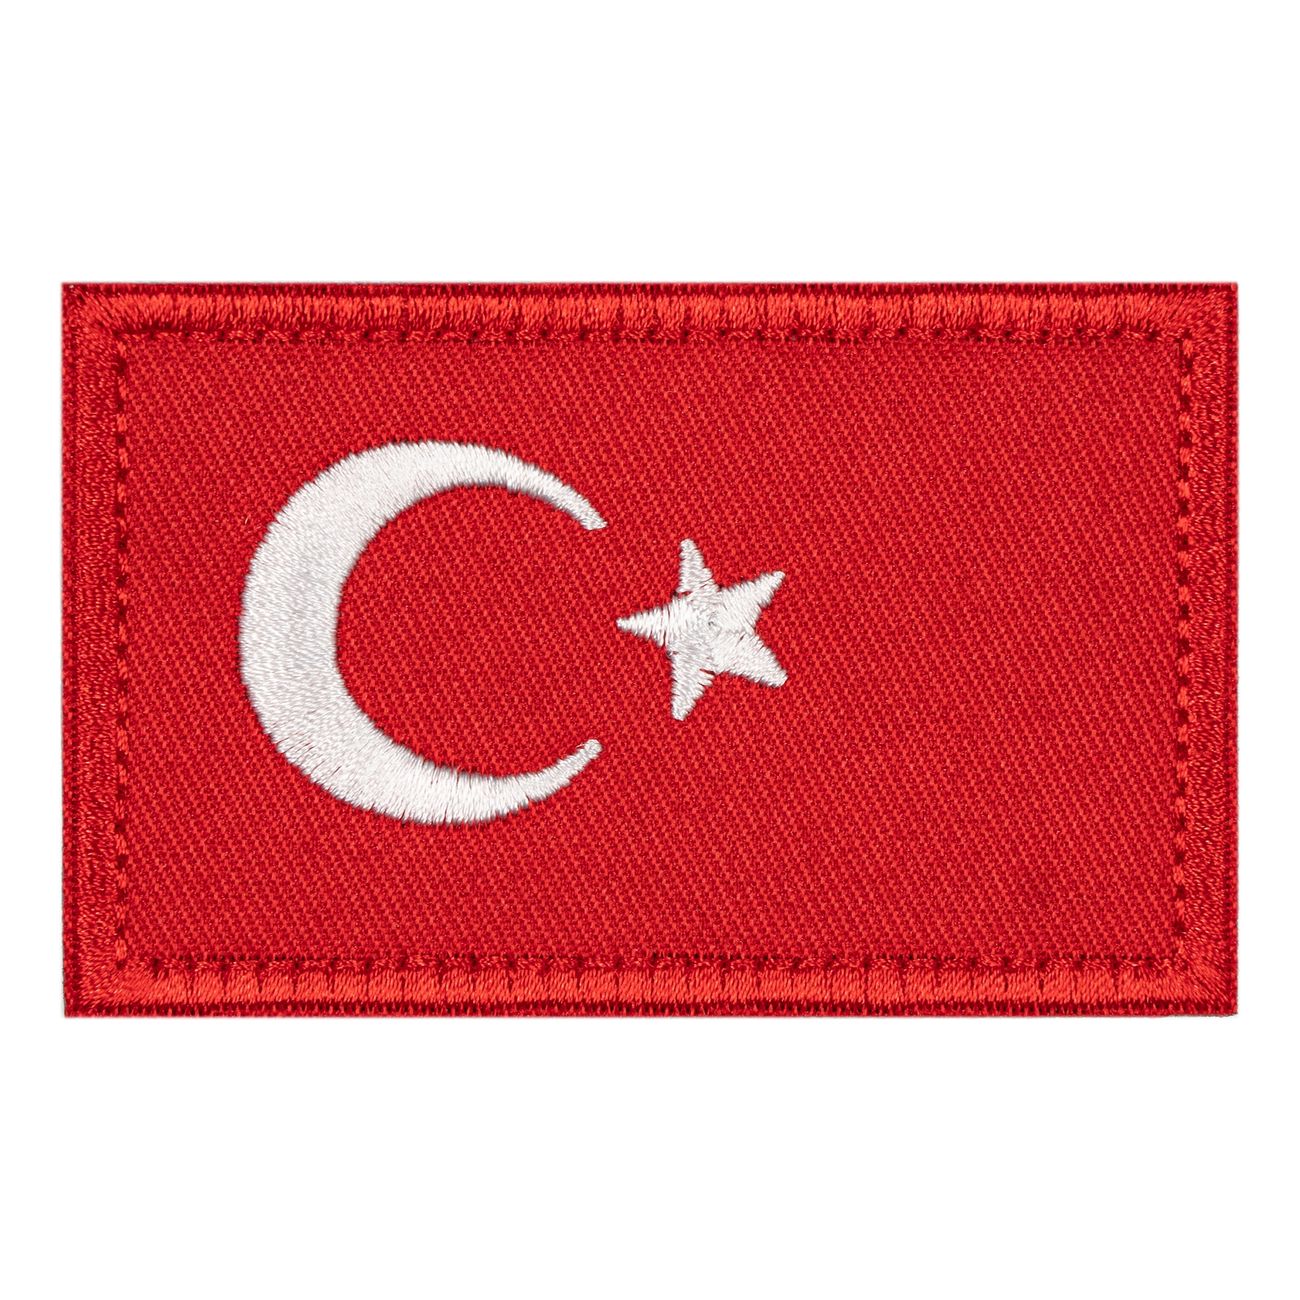 tygmarke-turkiska-flaggan-92029-1